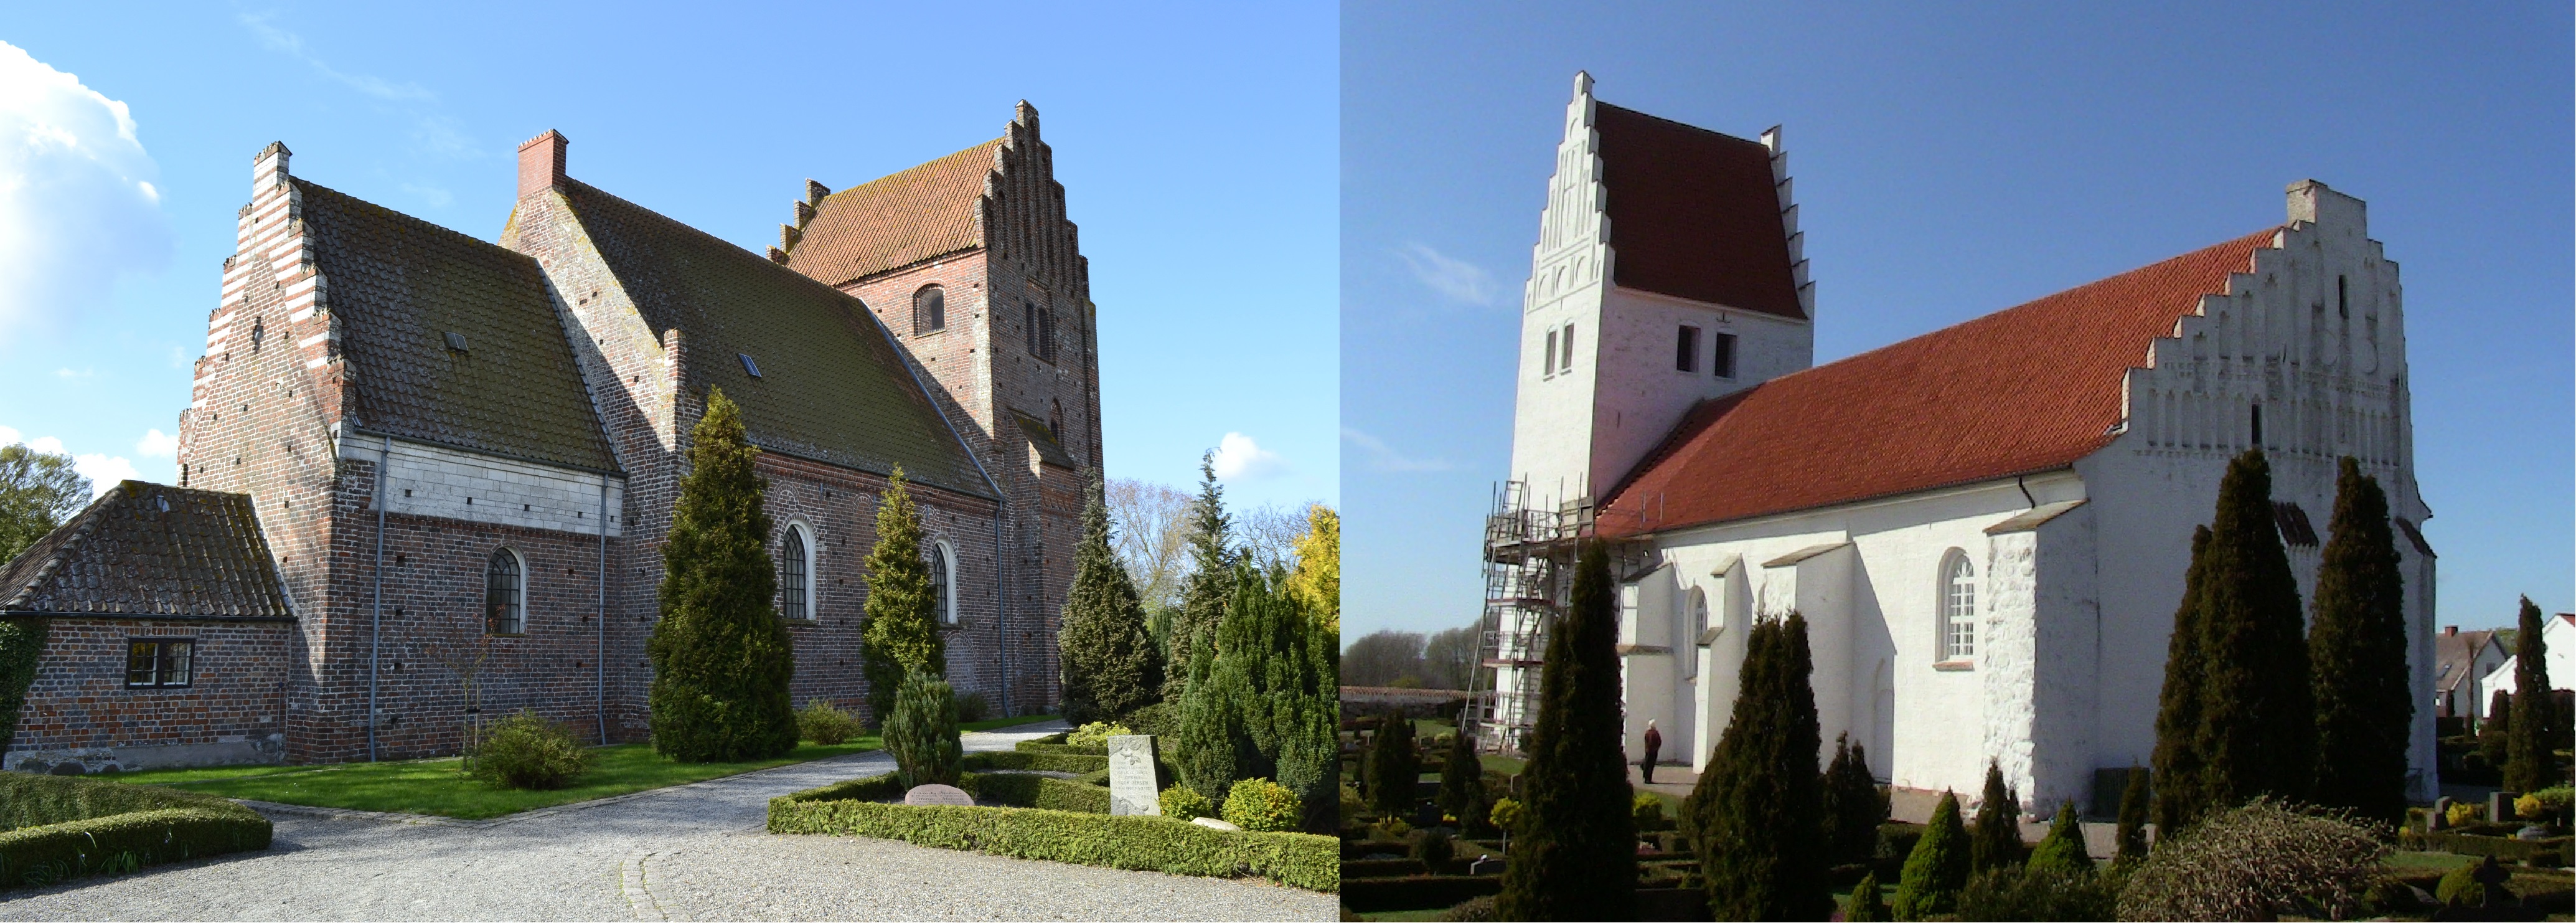 églises de Keldby et de Fanefjord jeanyvesbou.fr.JPG